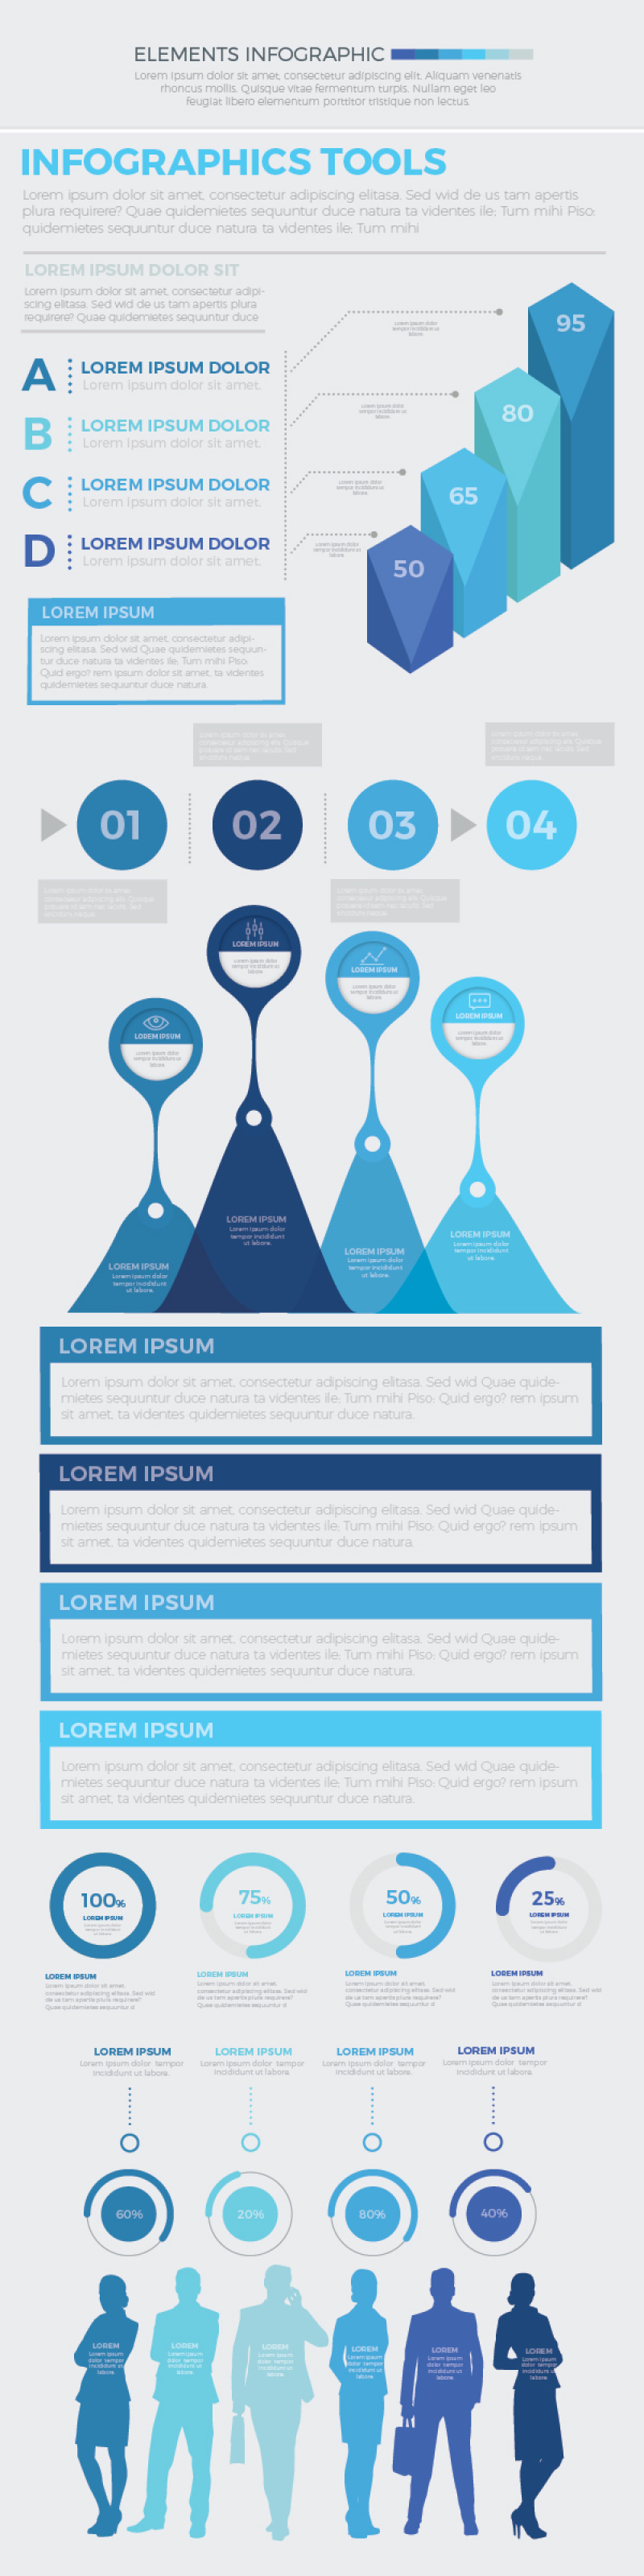 蓝色信息图形元素模板 Blue Infographics Elements Template